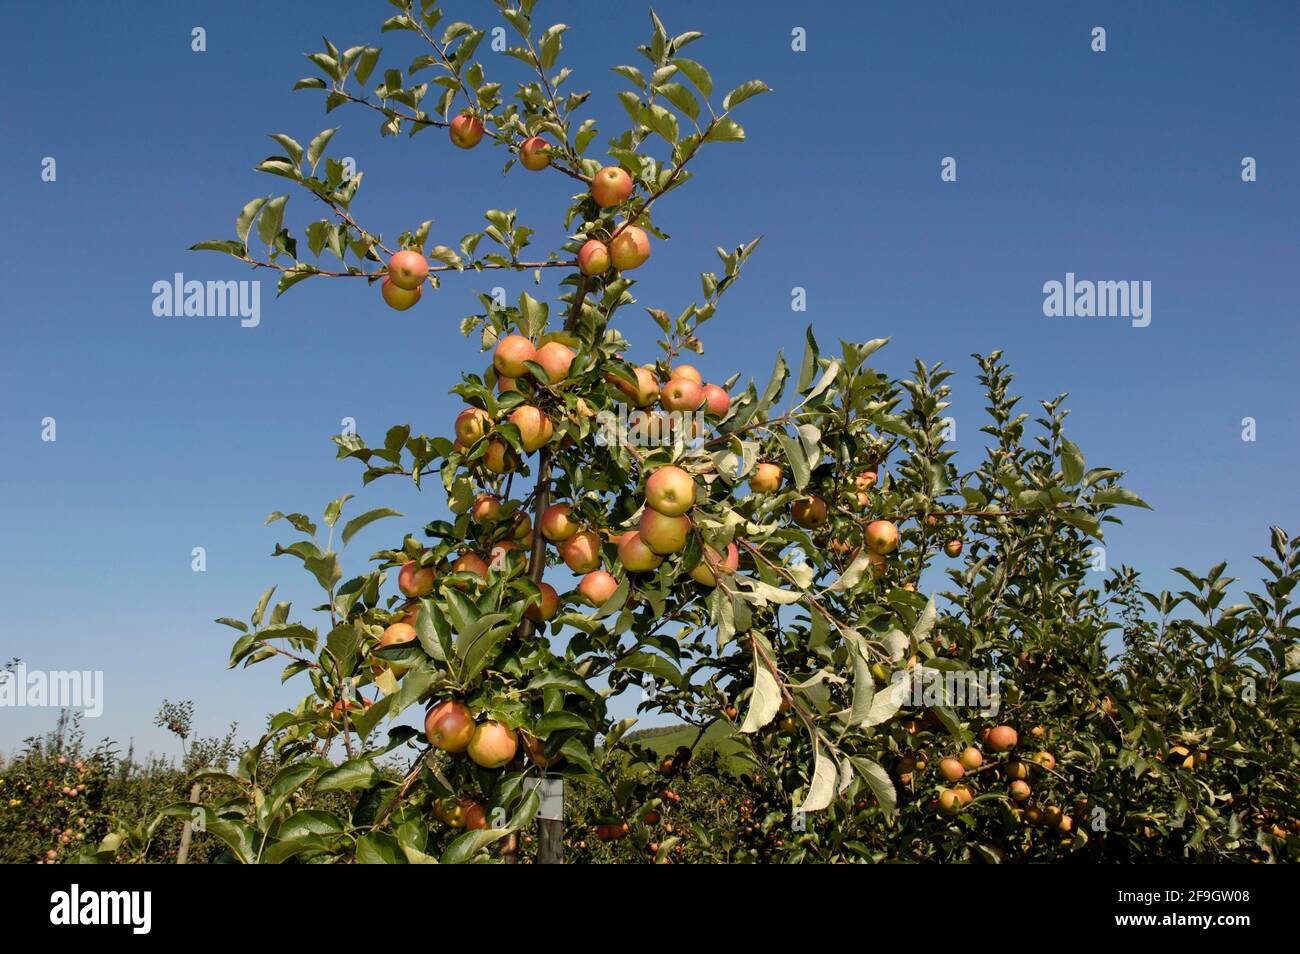 Apples on tree Rubinette Stock Photo